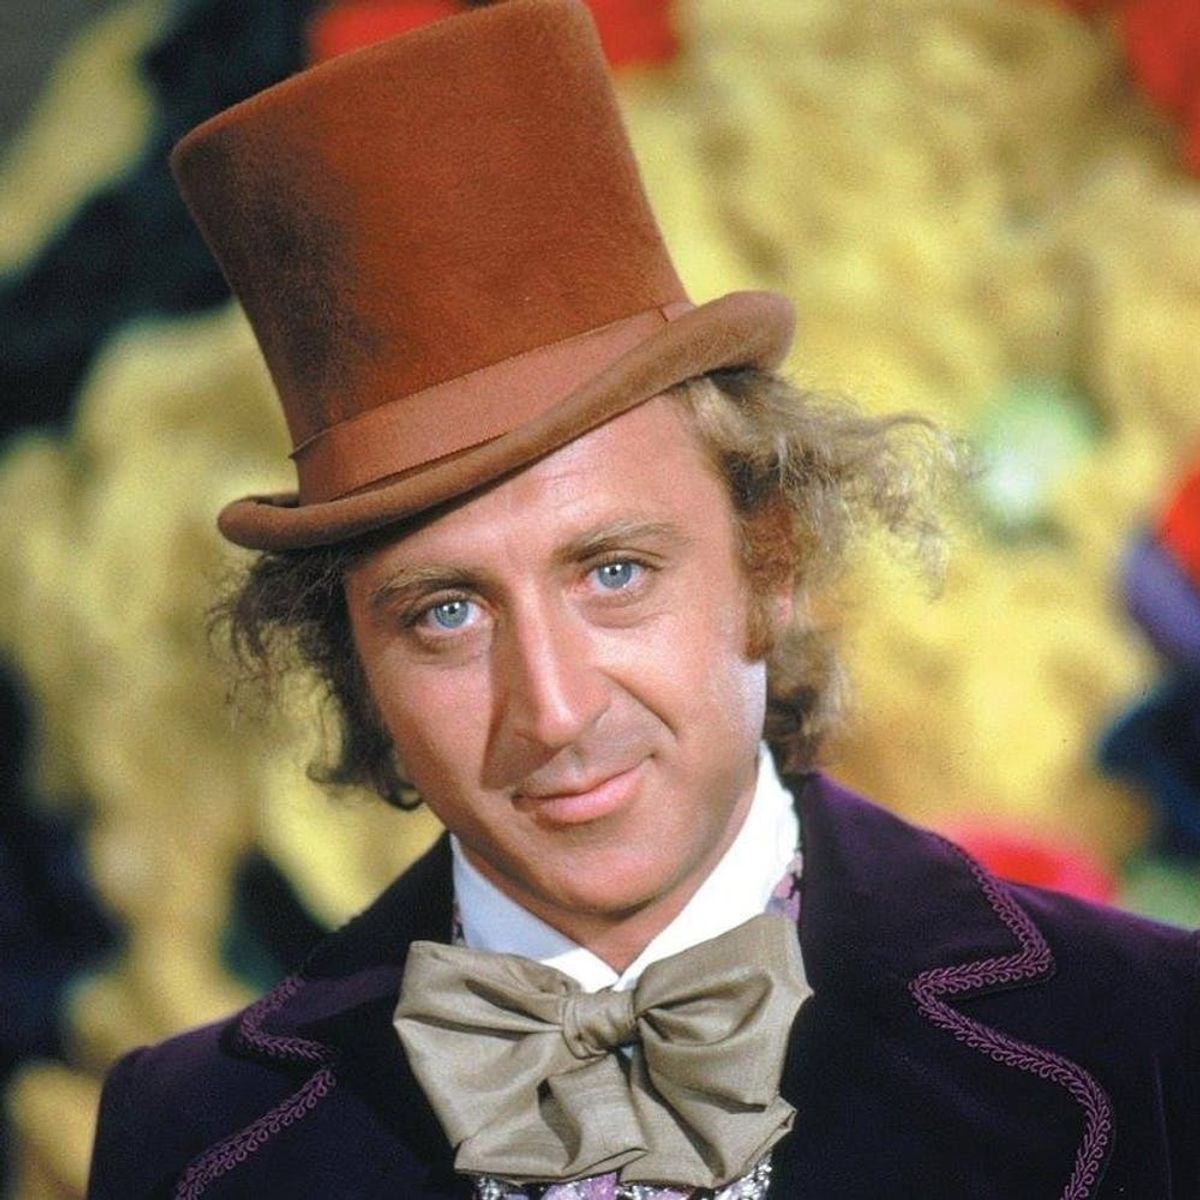 Fans Say Goodbye to the Original Willy Wonka, Actor Gene Wilder